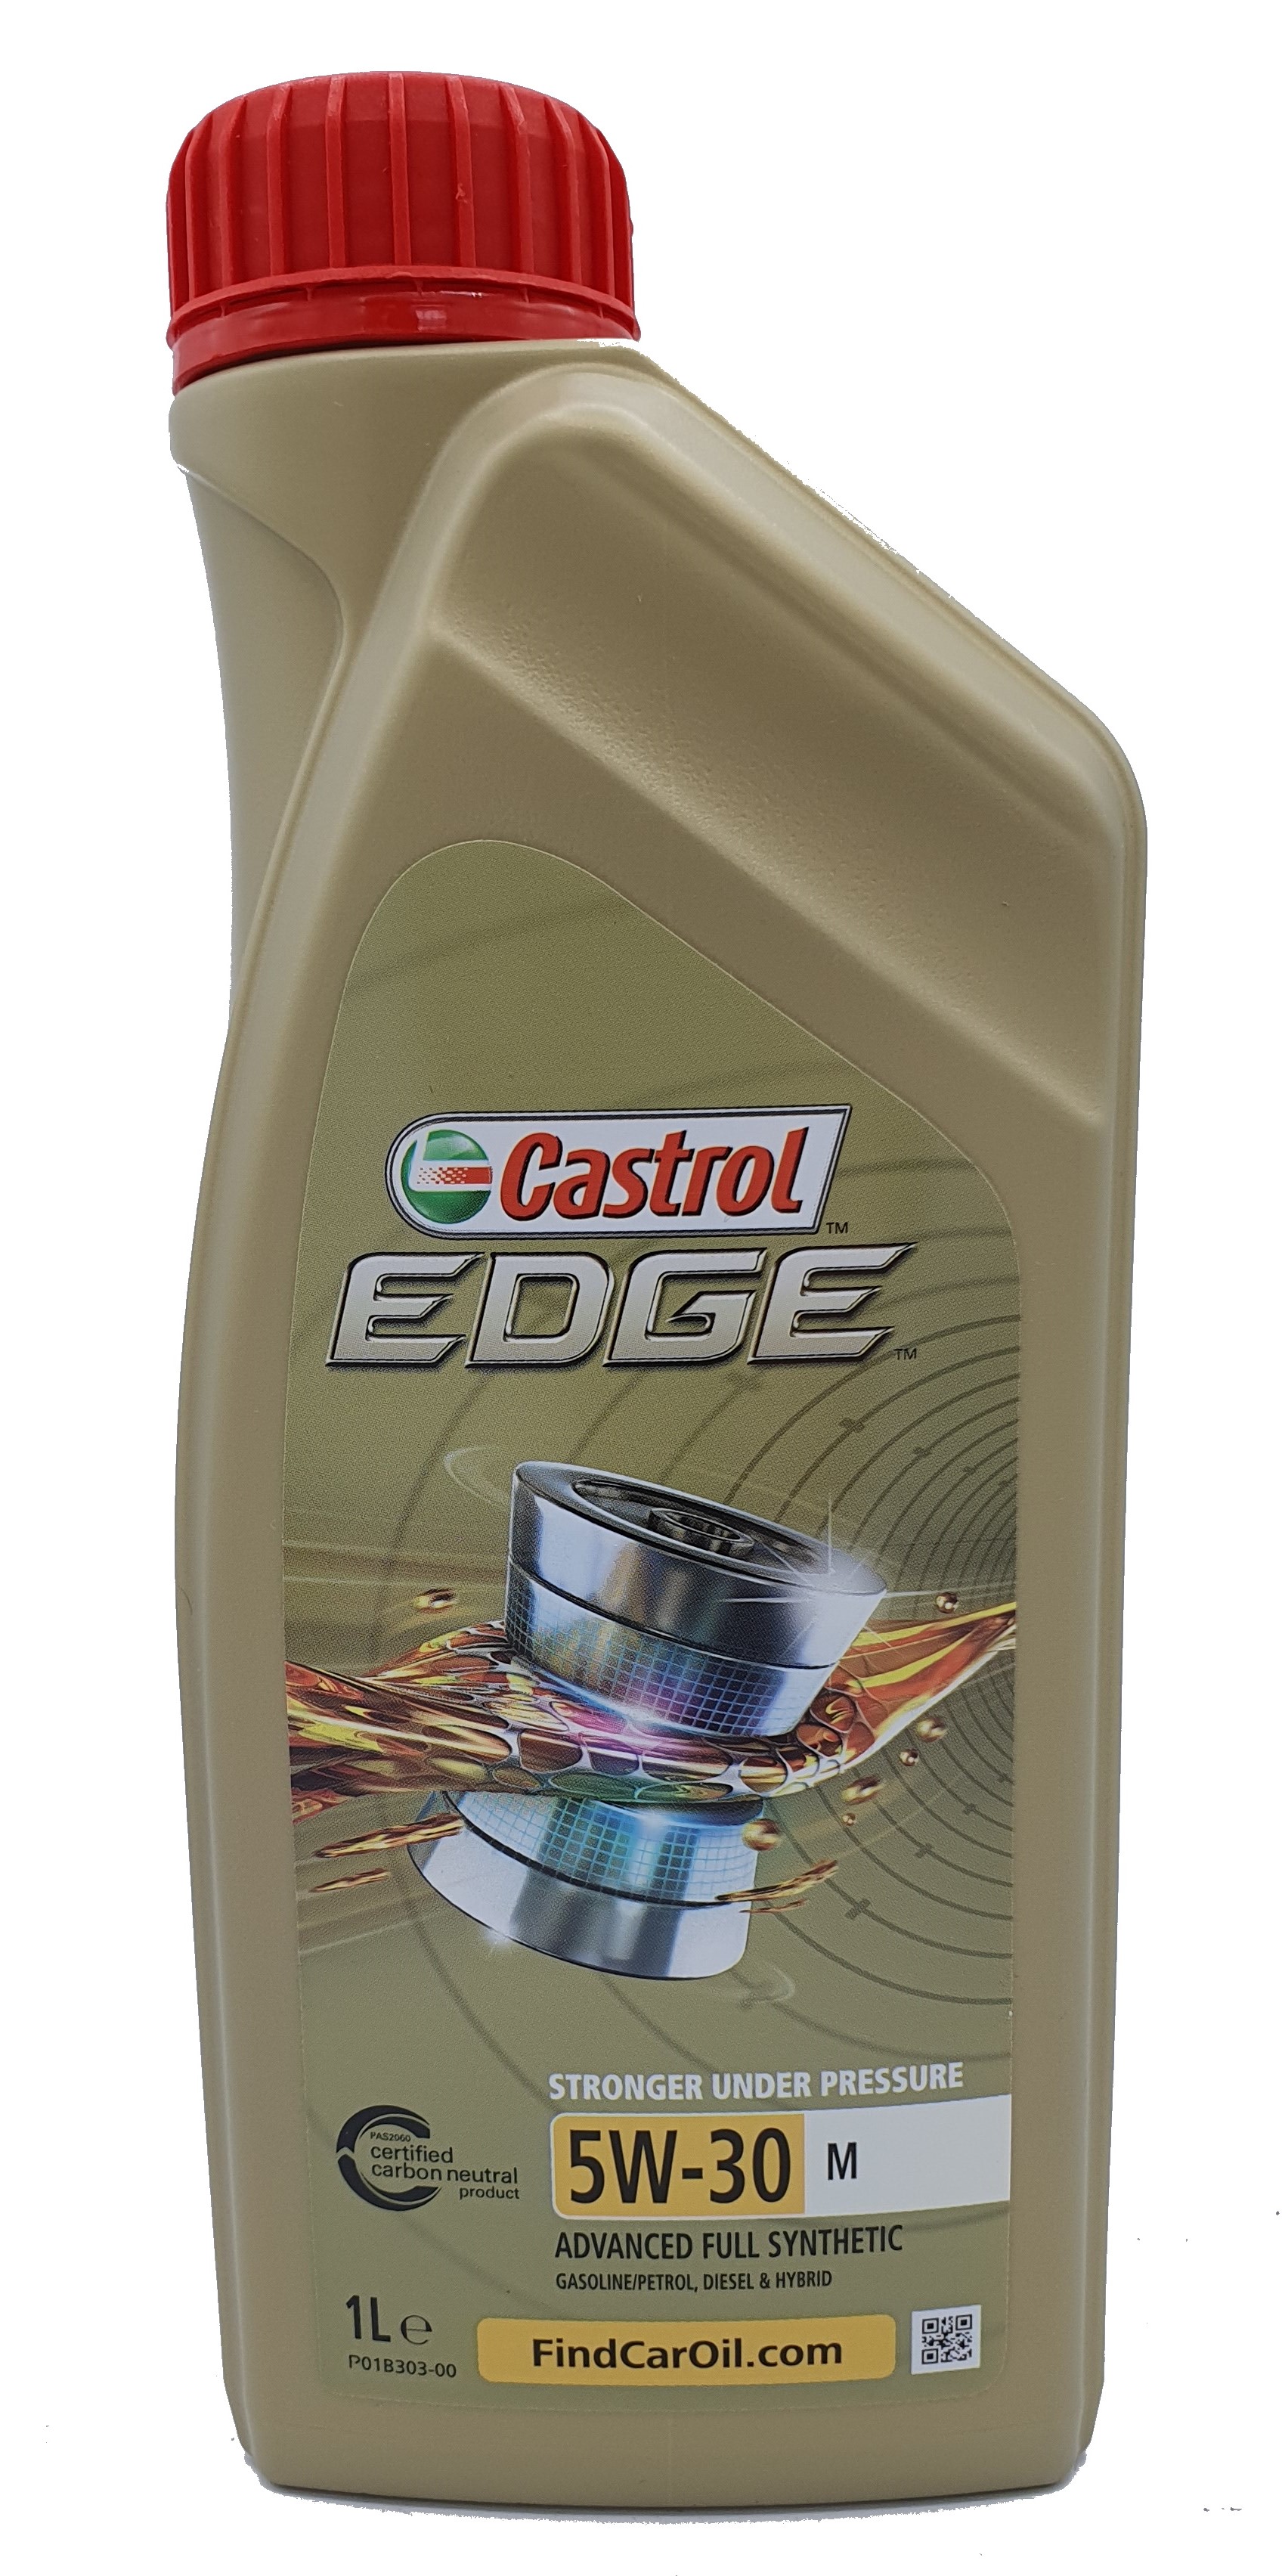 Castrol Edge 5W-30 M 6x1 Liter